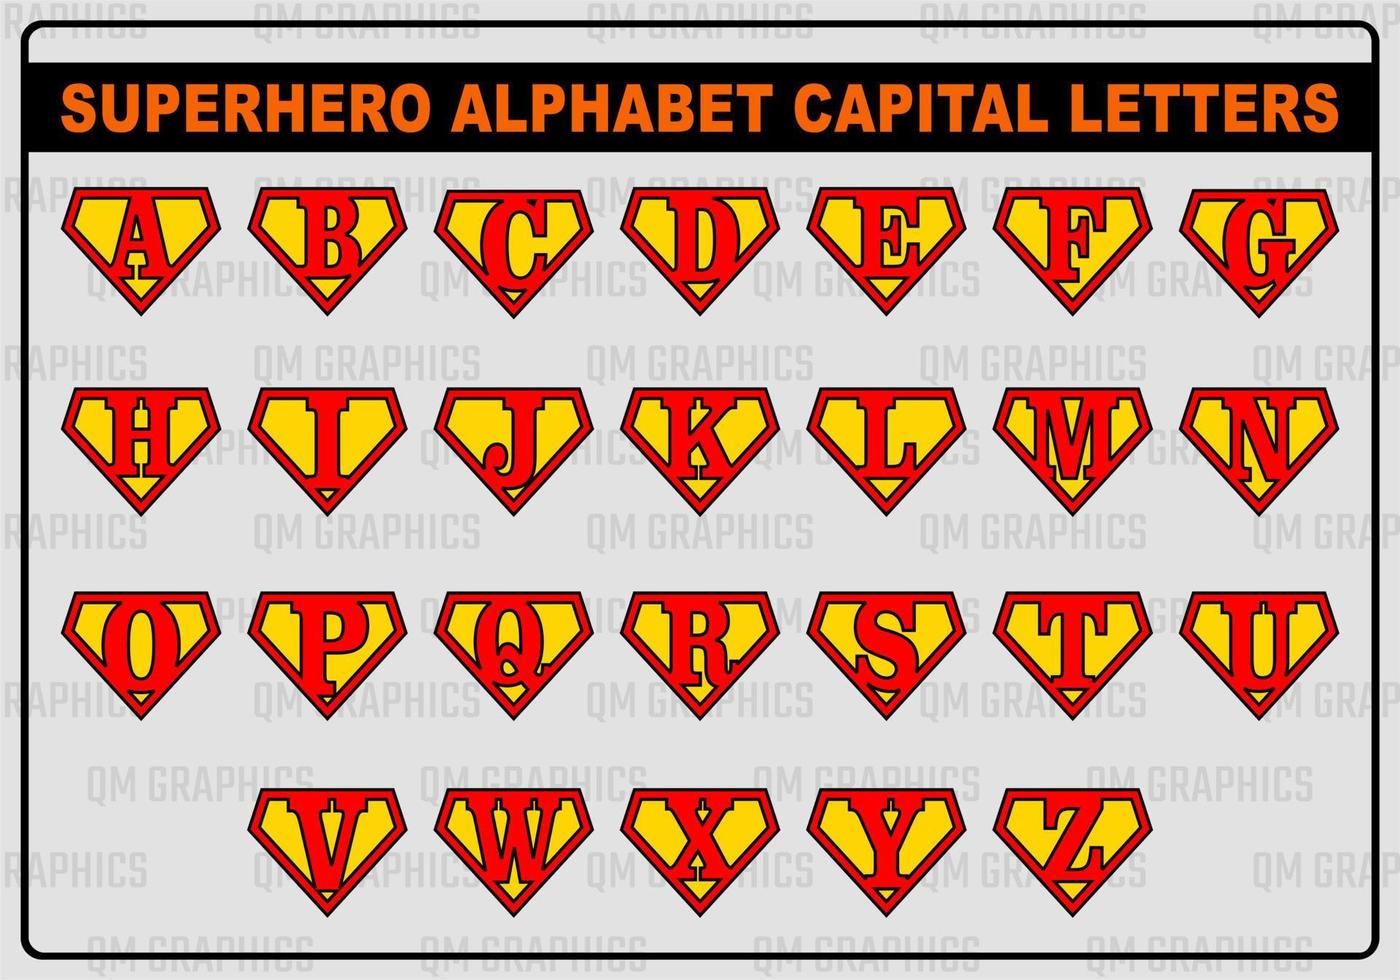 Super heroi alfabeto capital cartas vetor